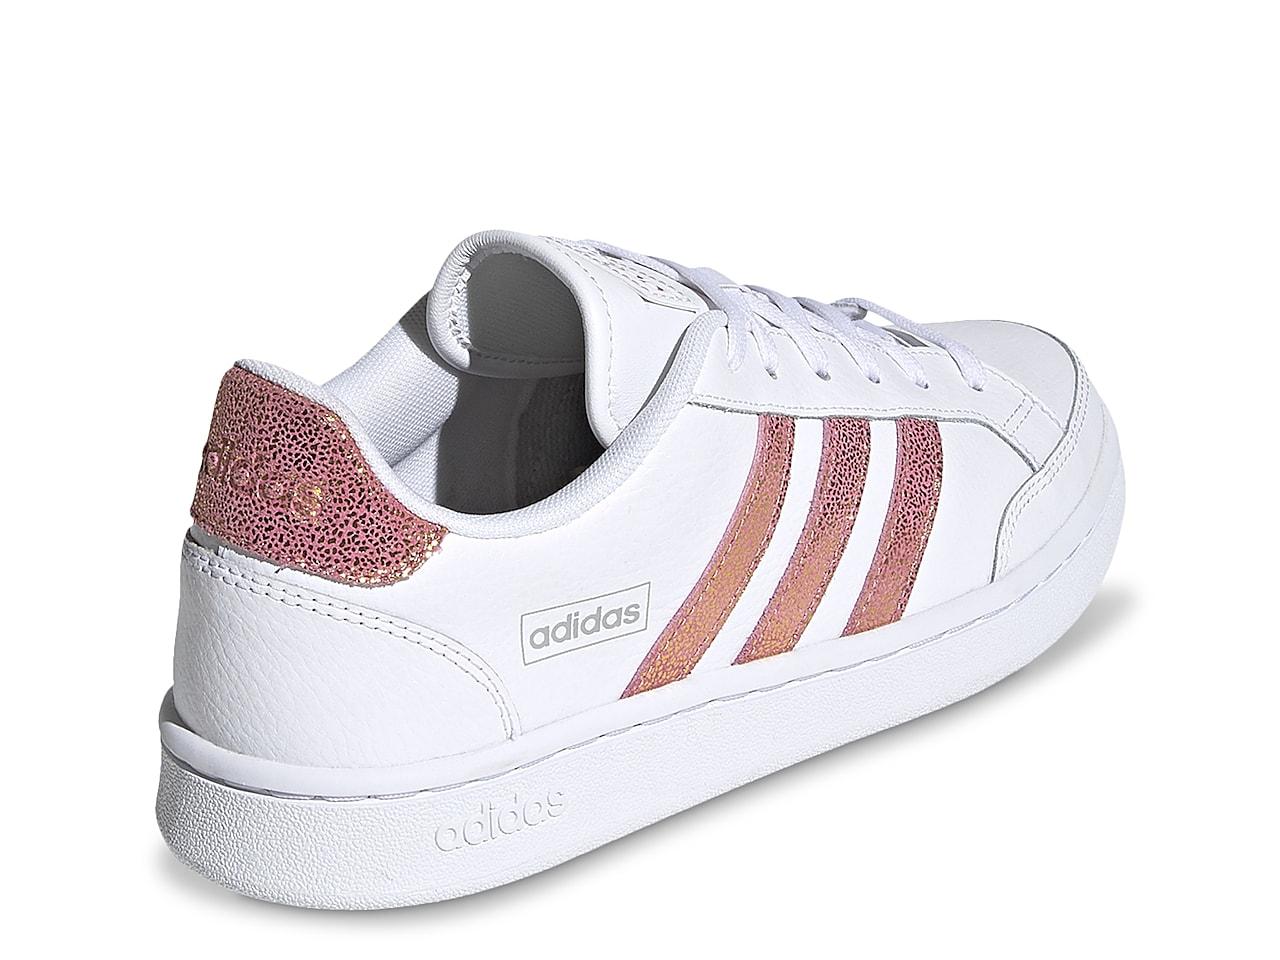 adidas Grand Court Se Sneaker in White/Rose Gold (White) | Lyst